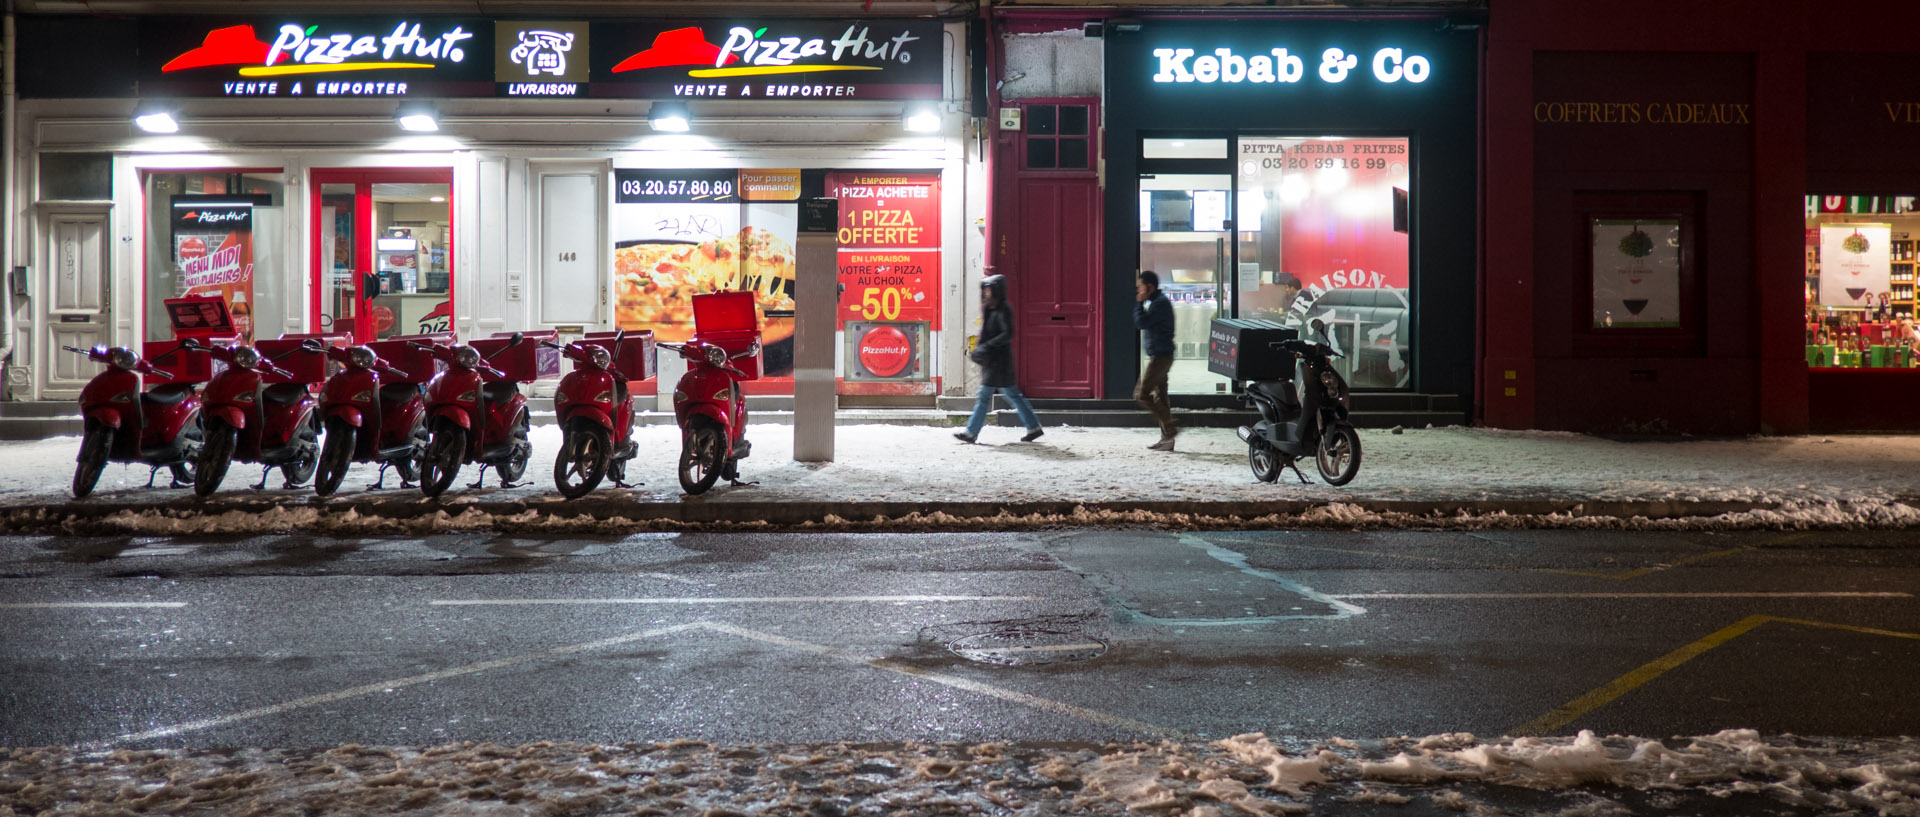 Pizza hut et Kebab & co, rue Solférino, à Lille.